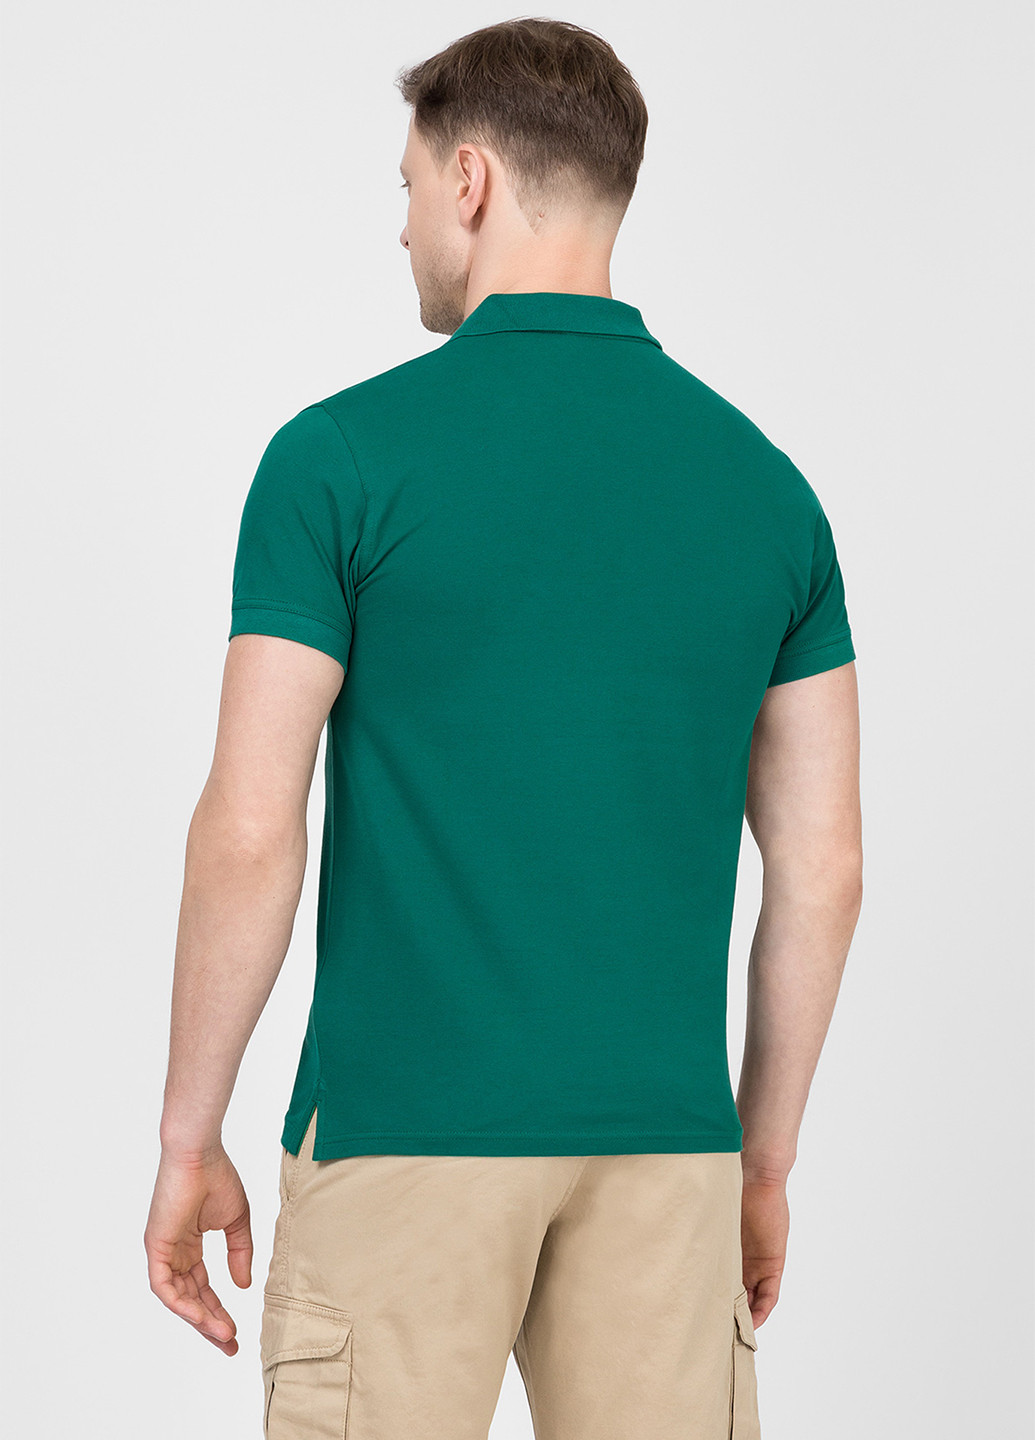 Зеленая футболка-поло для мужчин Gant с логотипом